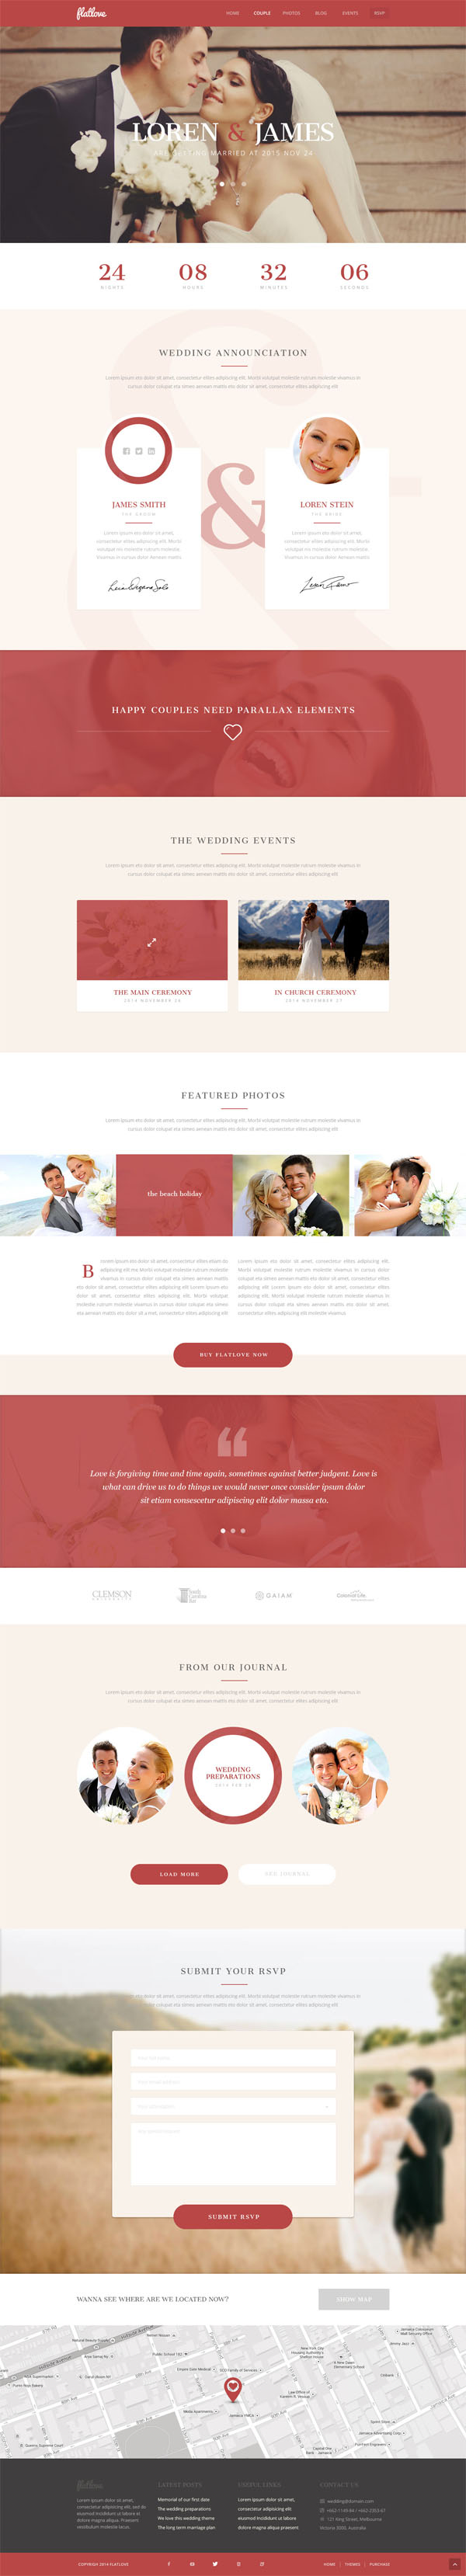 FlatLove - Flat One Page Wedding HTML5 Template